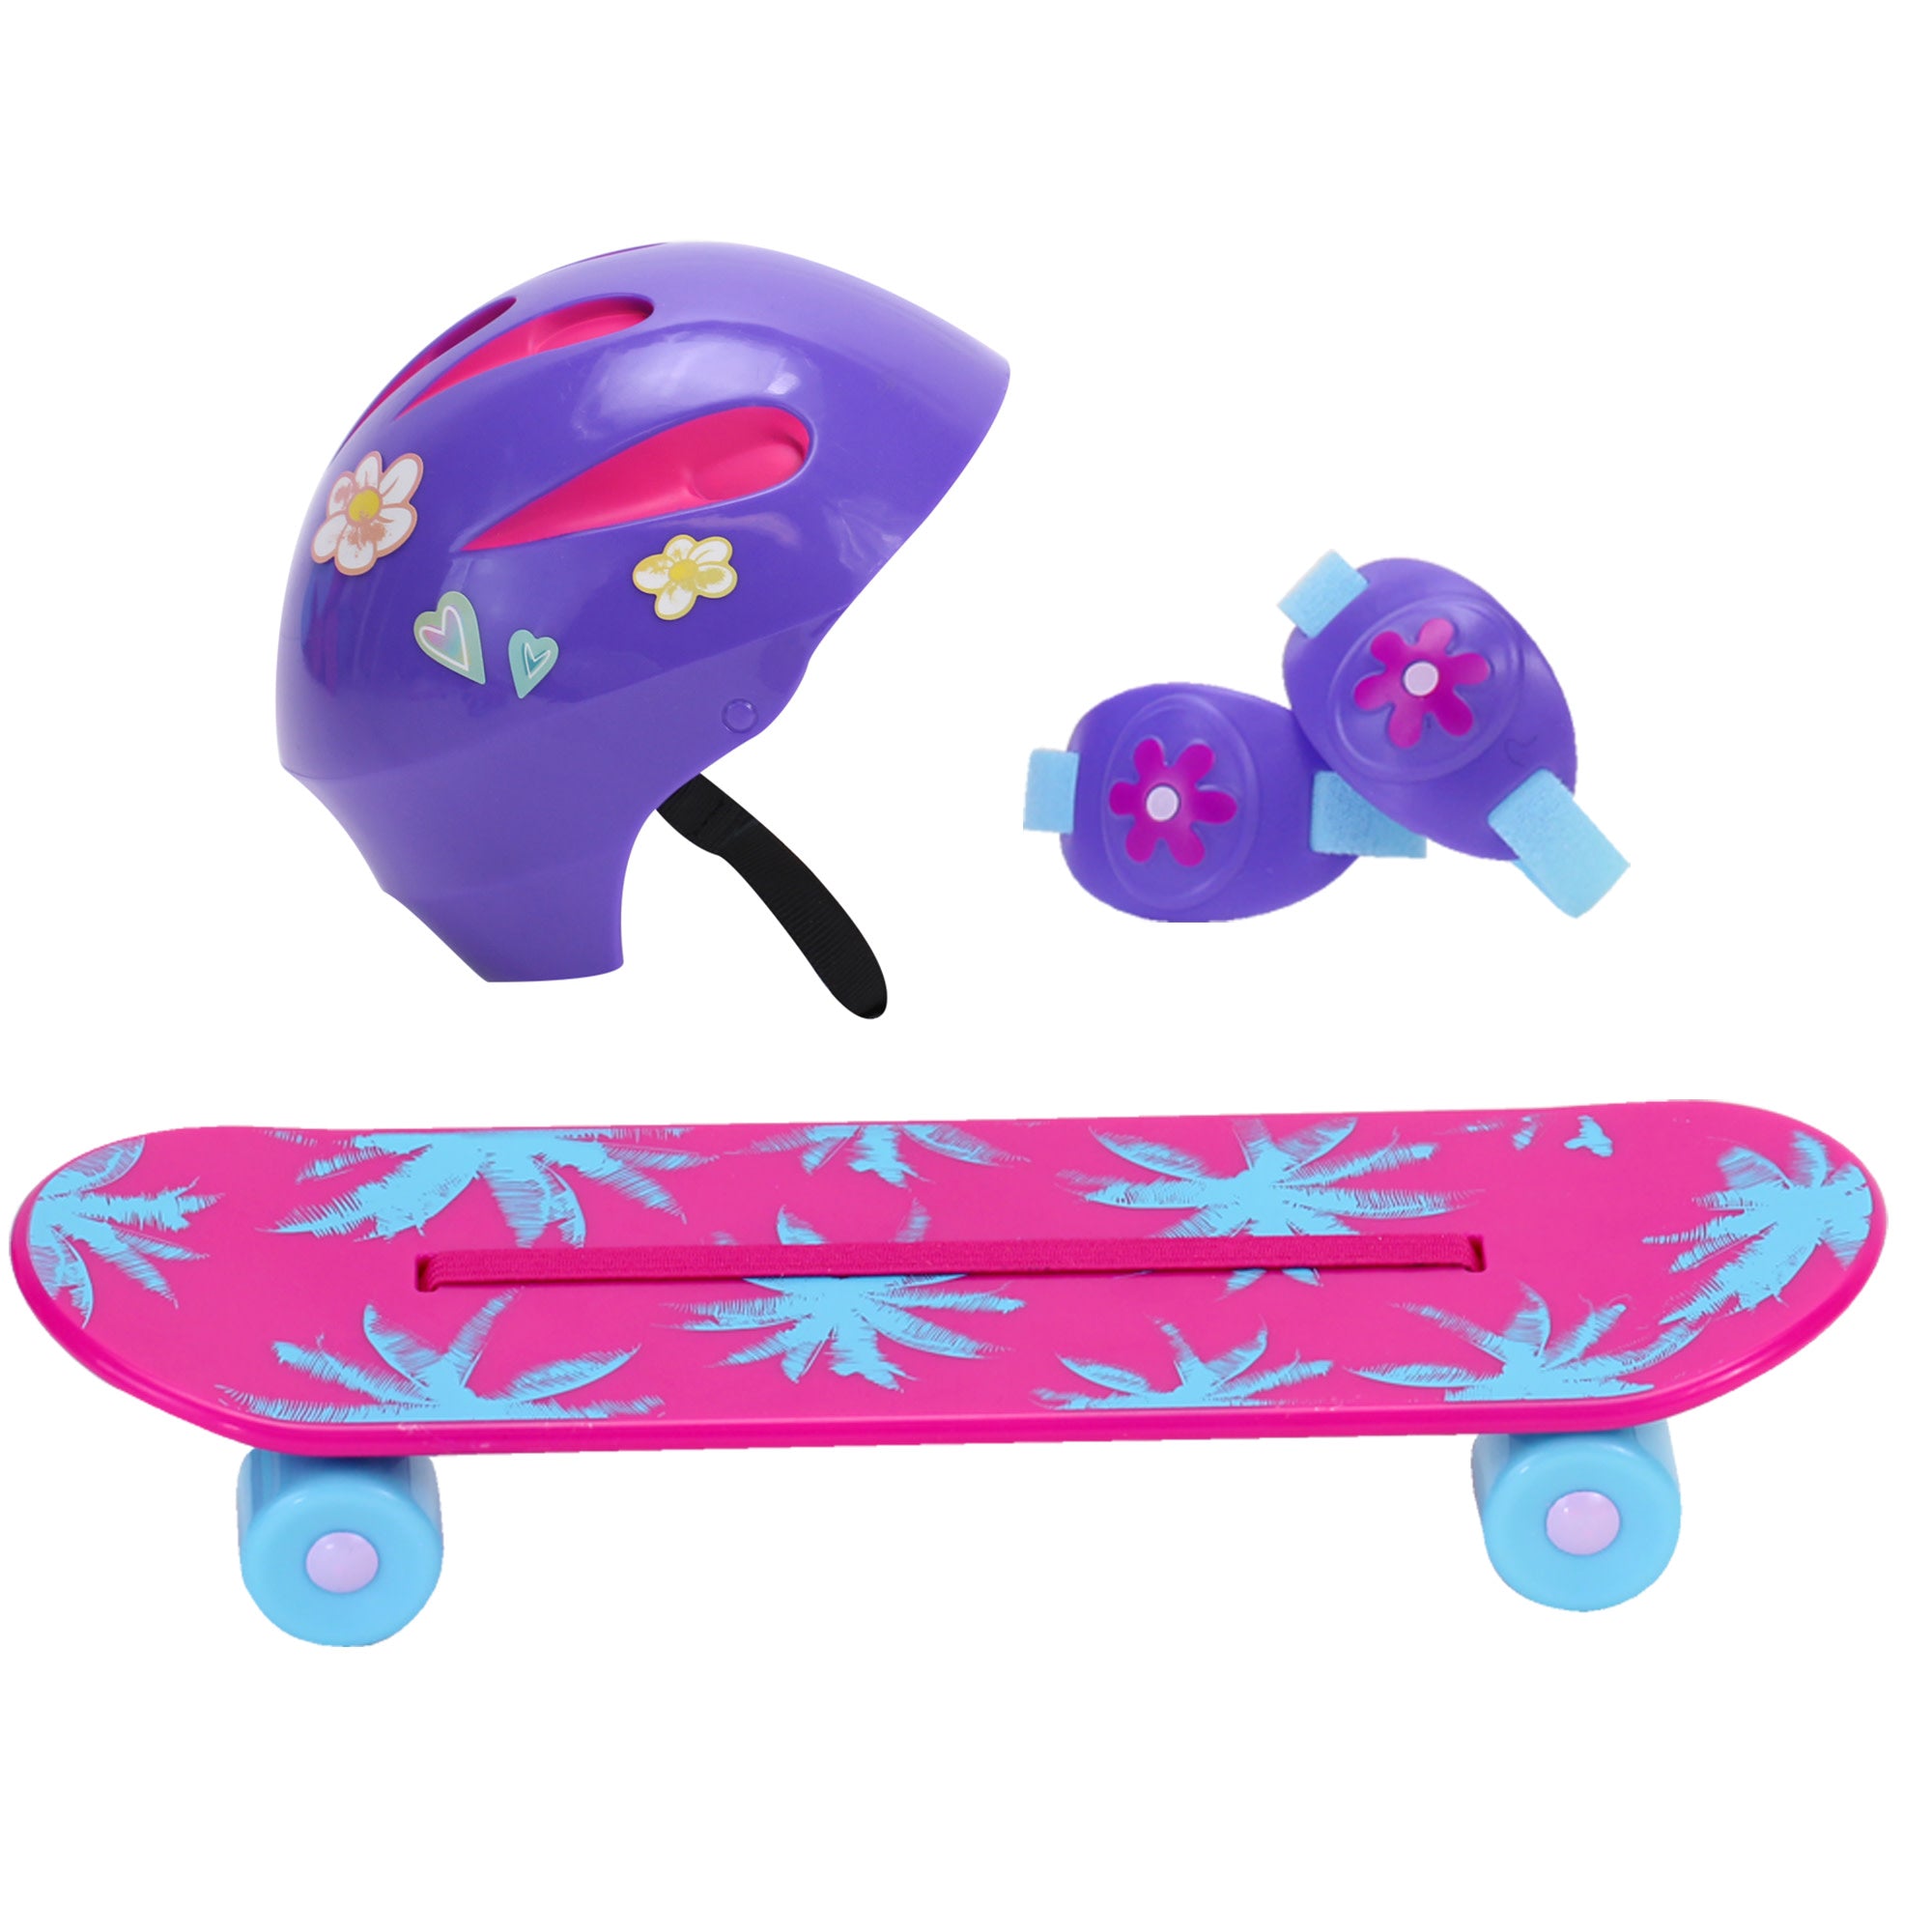 Sophia's - 18" Doll - Skateboard, Helmet & Knee Pads Set - Blue